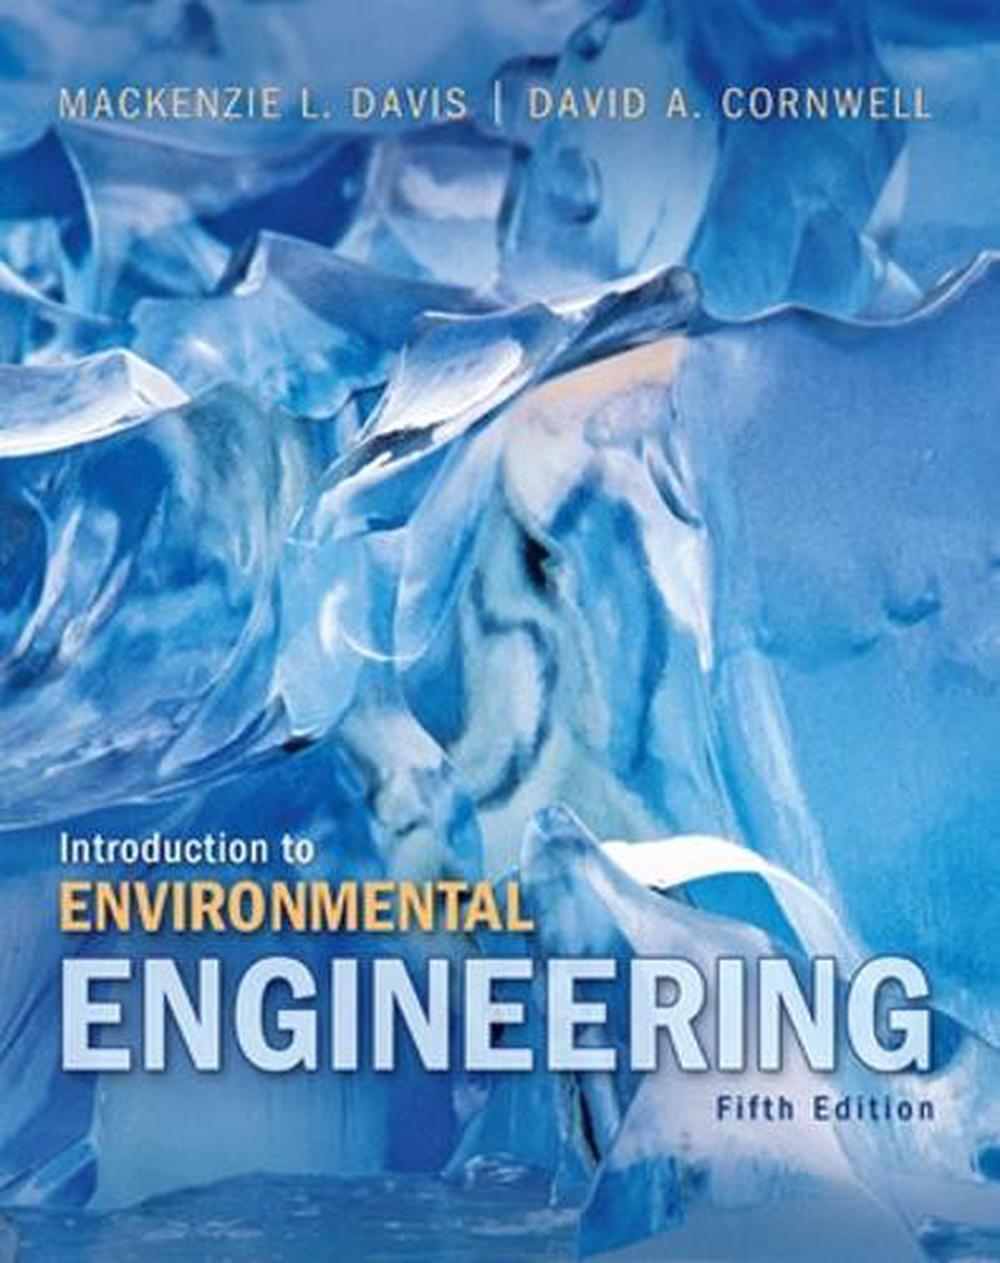 Introduction to Environmental Engineering 5th Edition by Mackenzie Leo Davis (En eBay